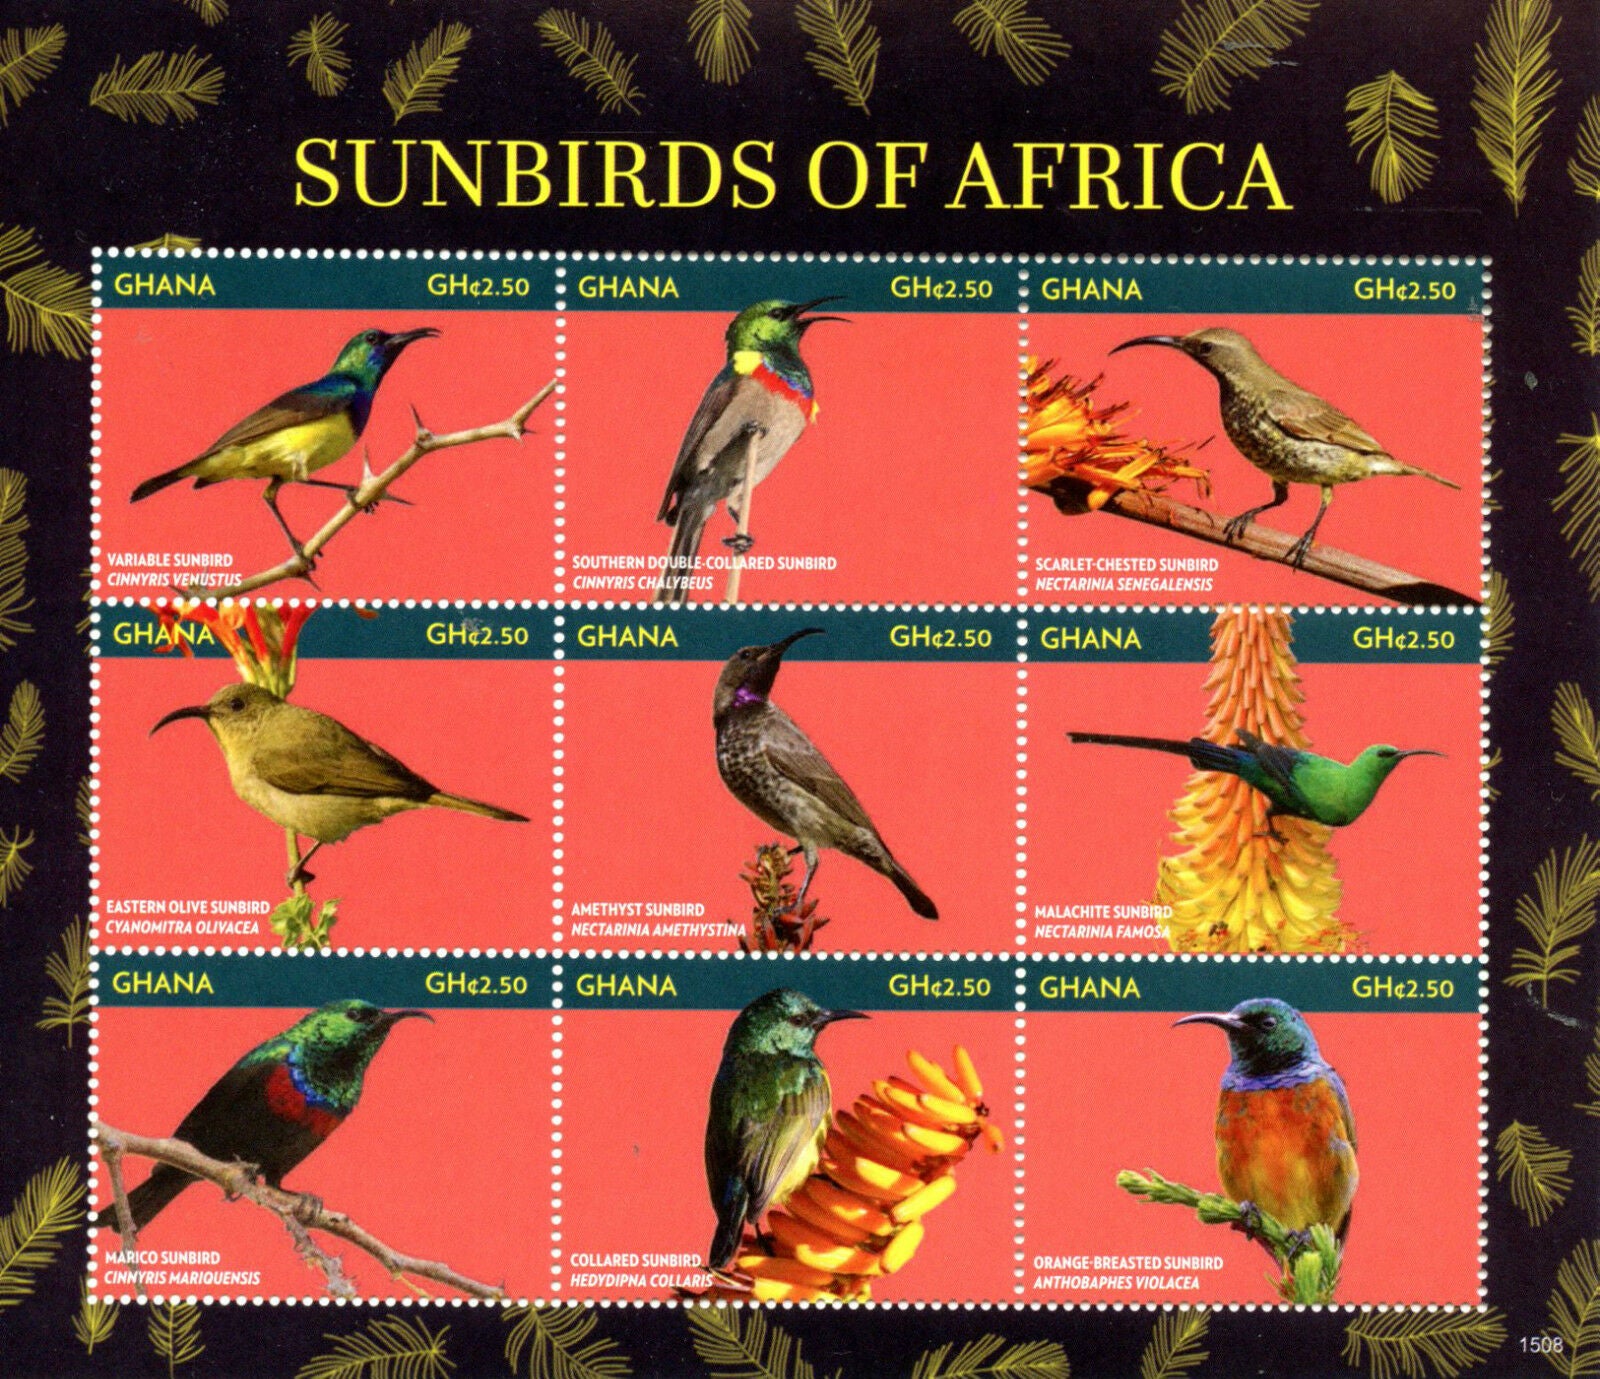 Ghana Birds on Stamps 2015 MNH Sunbirds of Africa Marico Amethyst Sunbird 9v M/S